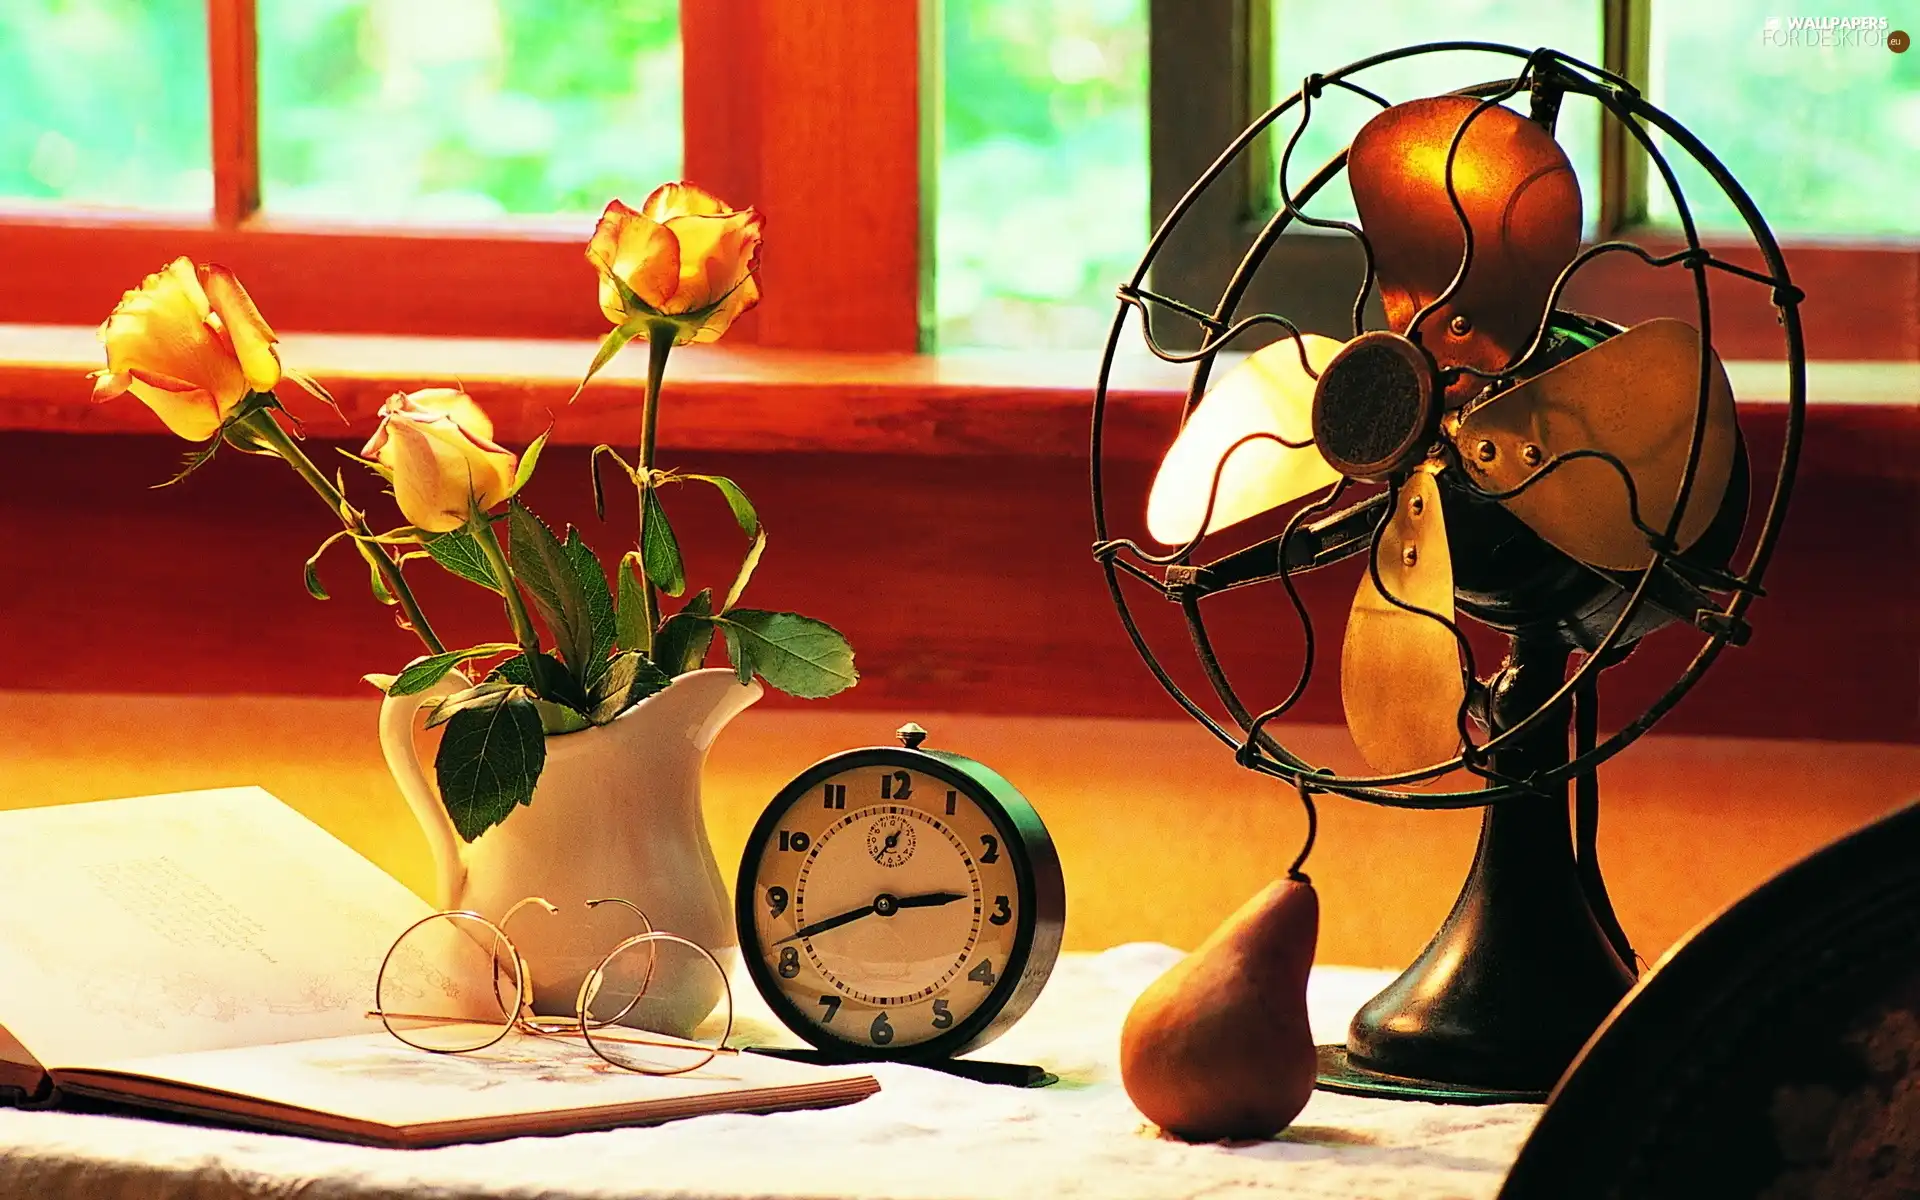 Watch, Book, Vase, ventilator, Flowers, Glasses